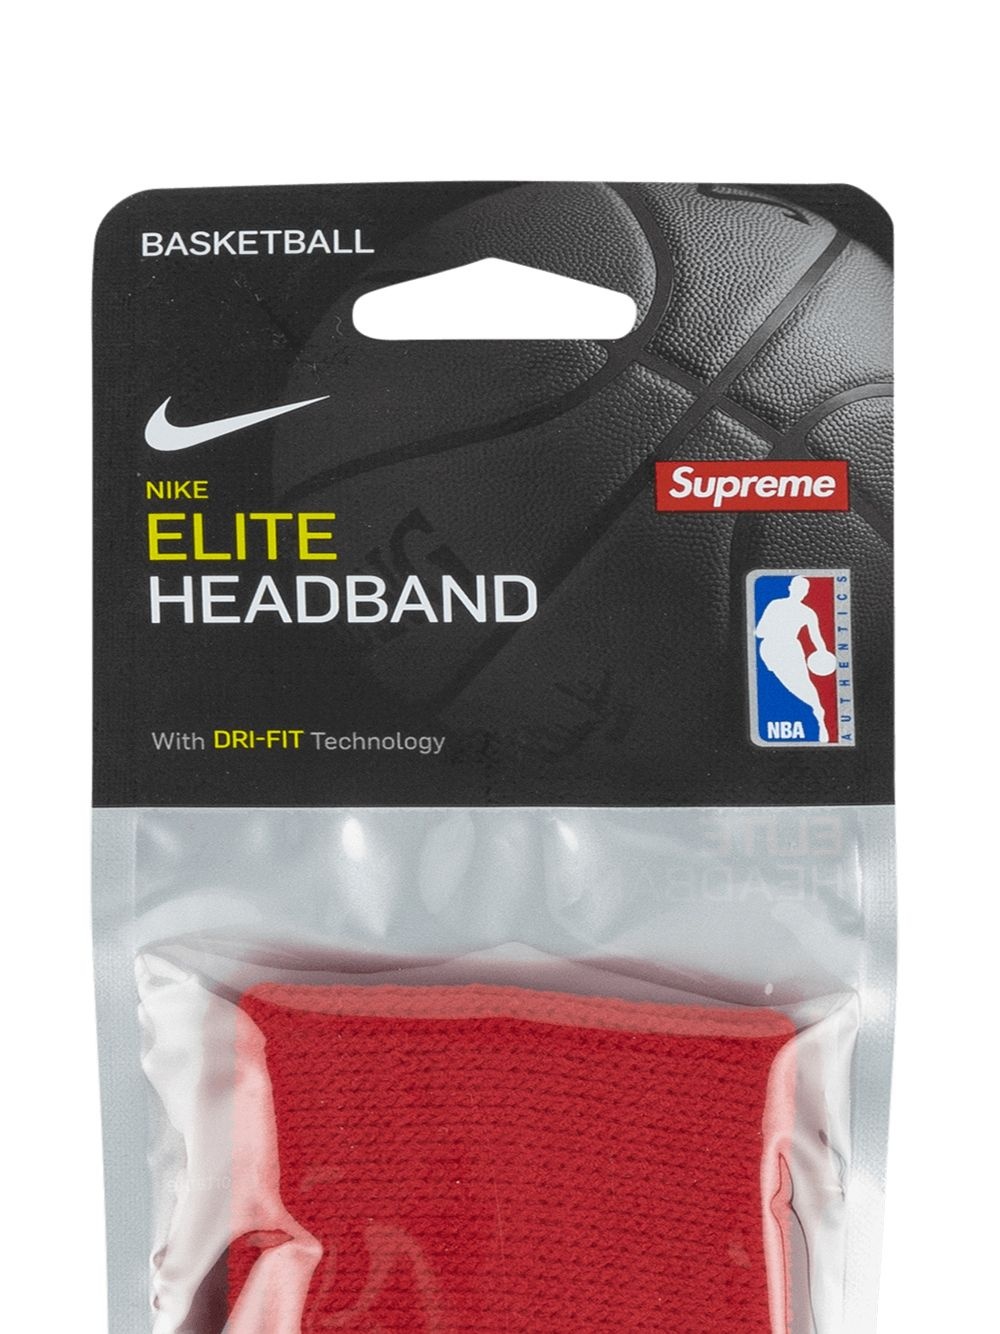 x Nike Elite headband - 3